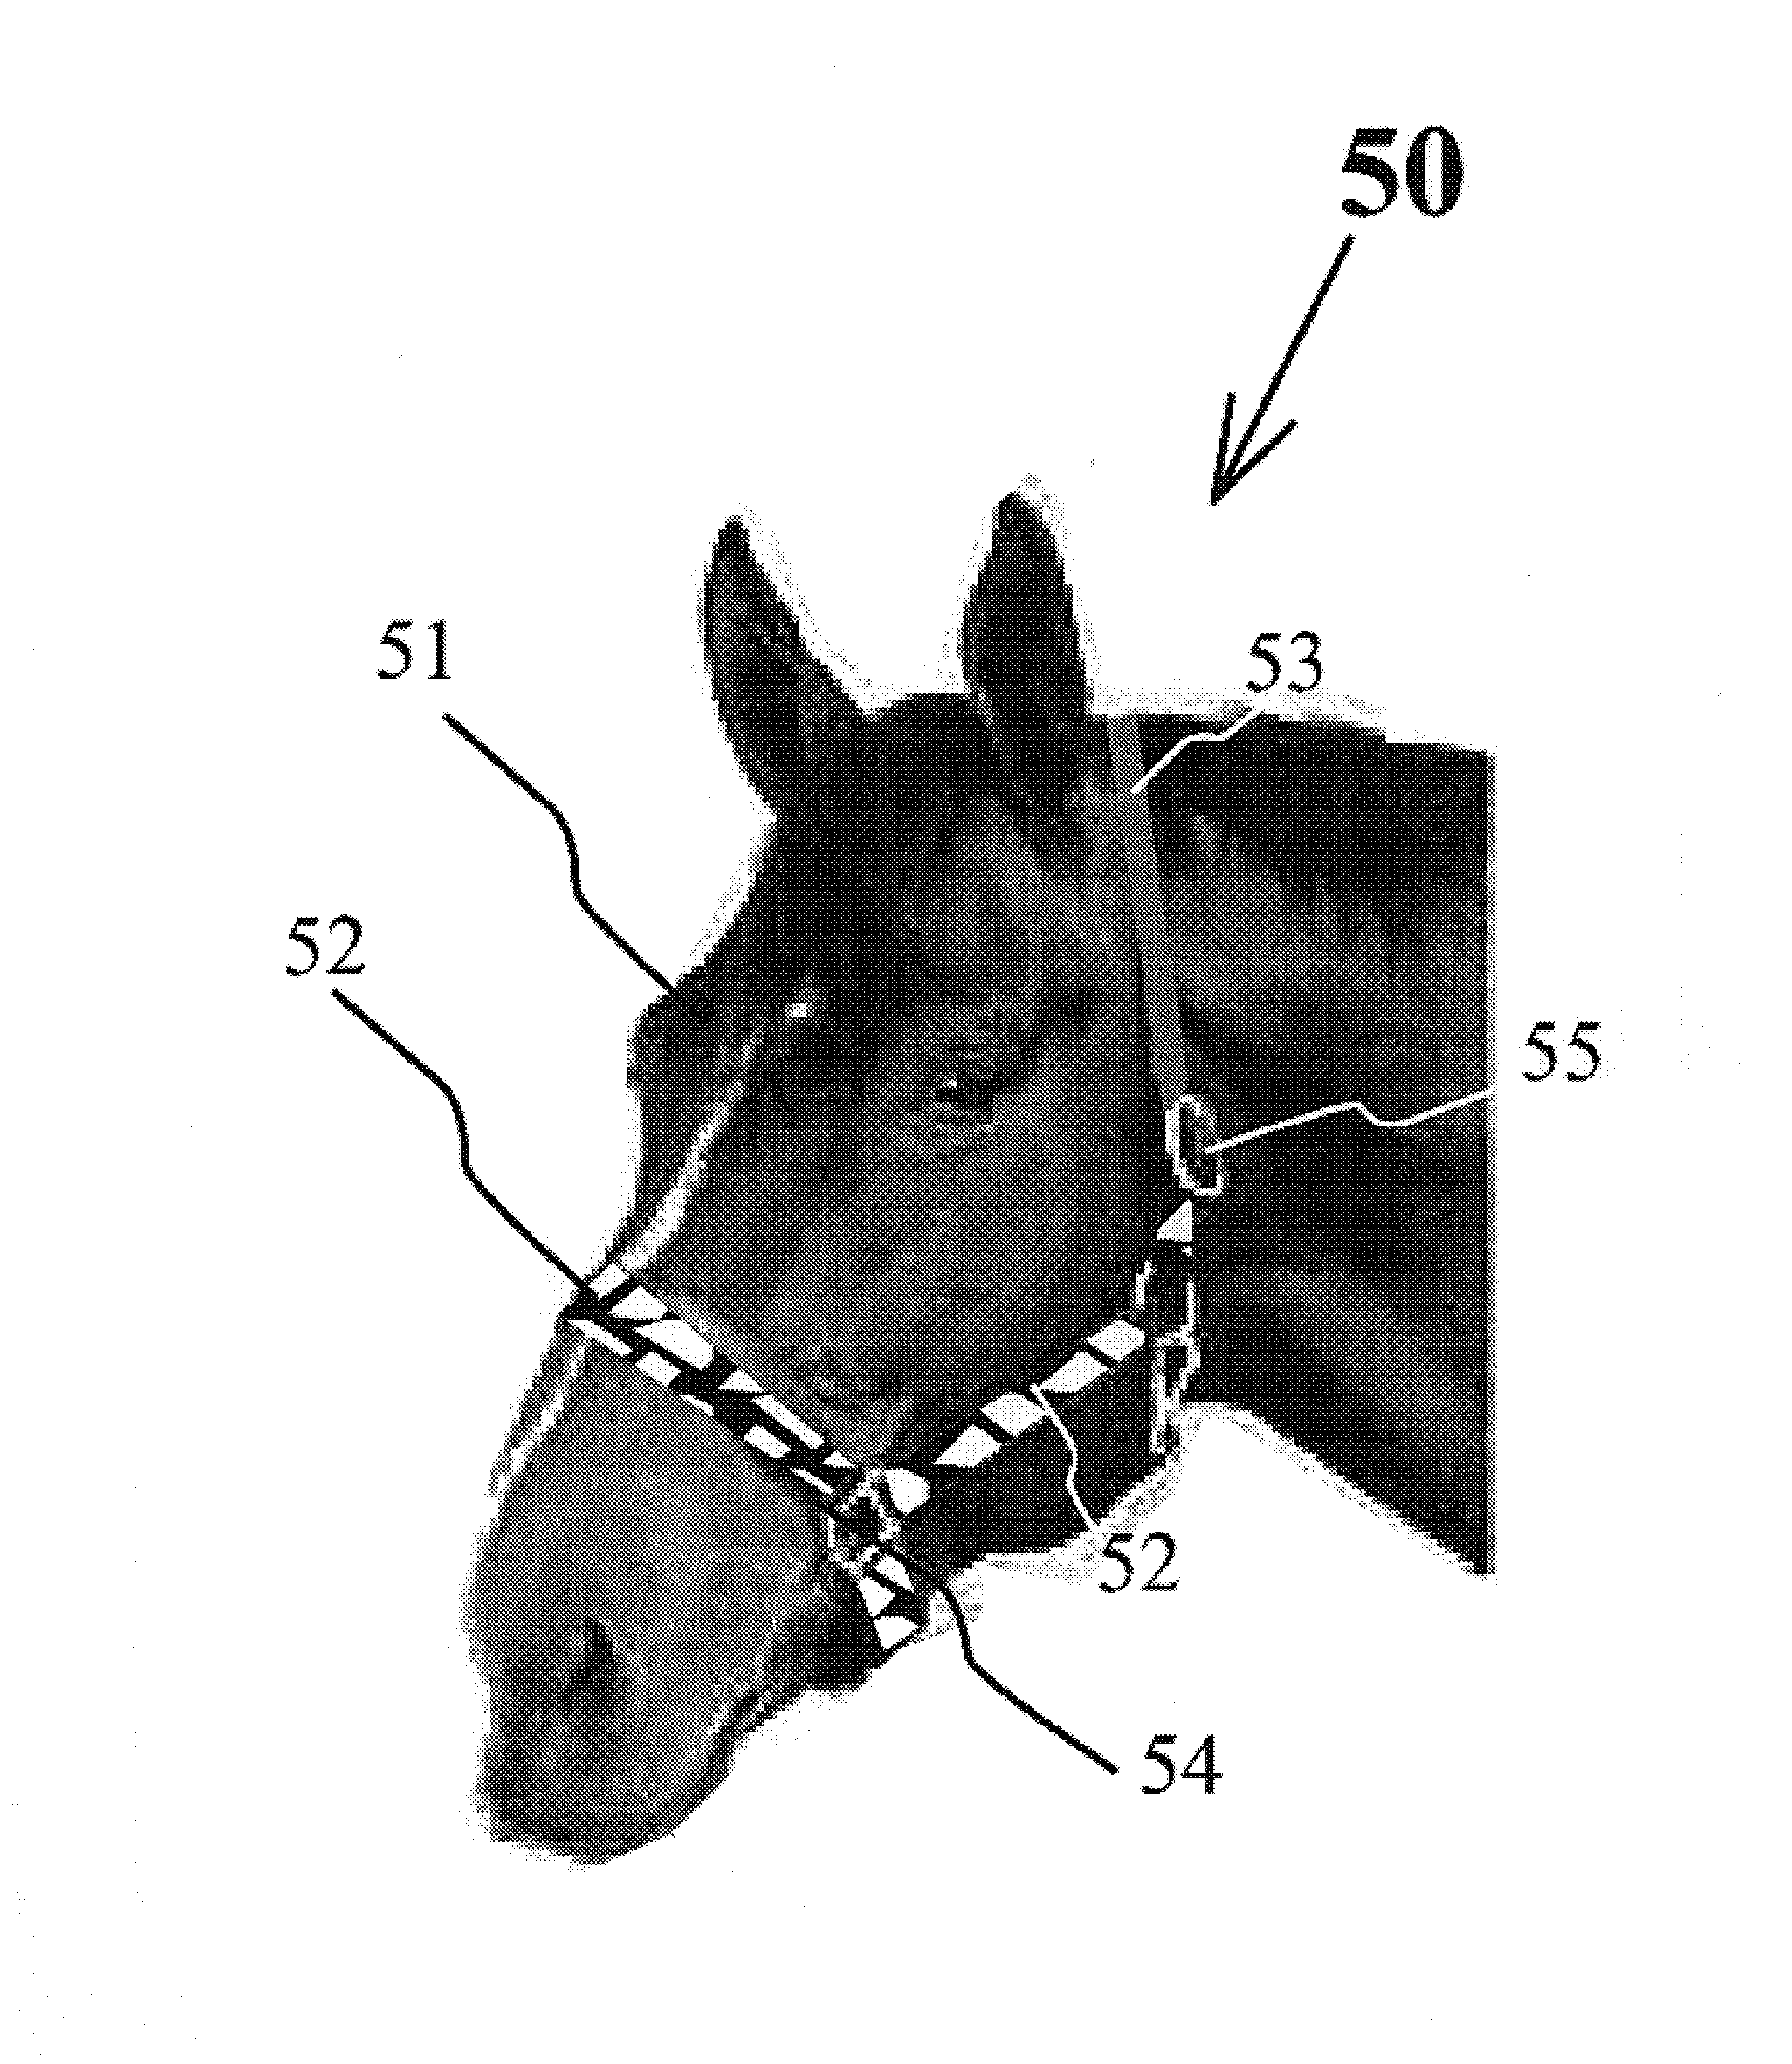 Omnidirectionally reflective horse halter